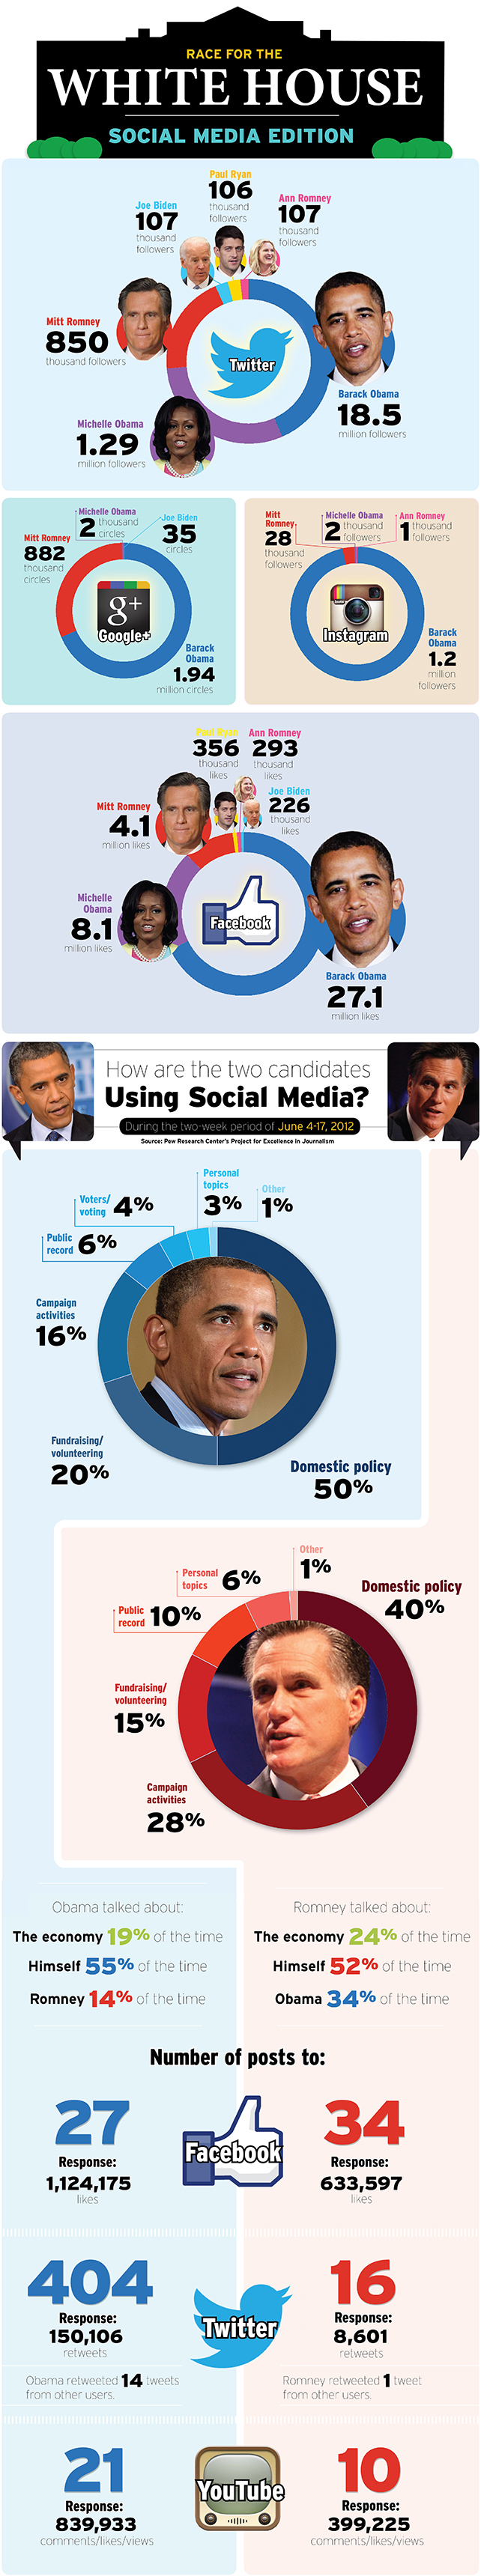 Marca comercial Restricción El sendero Infographic: How Obama, Romney (and Friends) Are Using Social Media | Ad Age